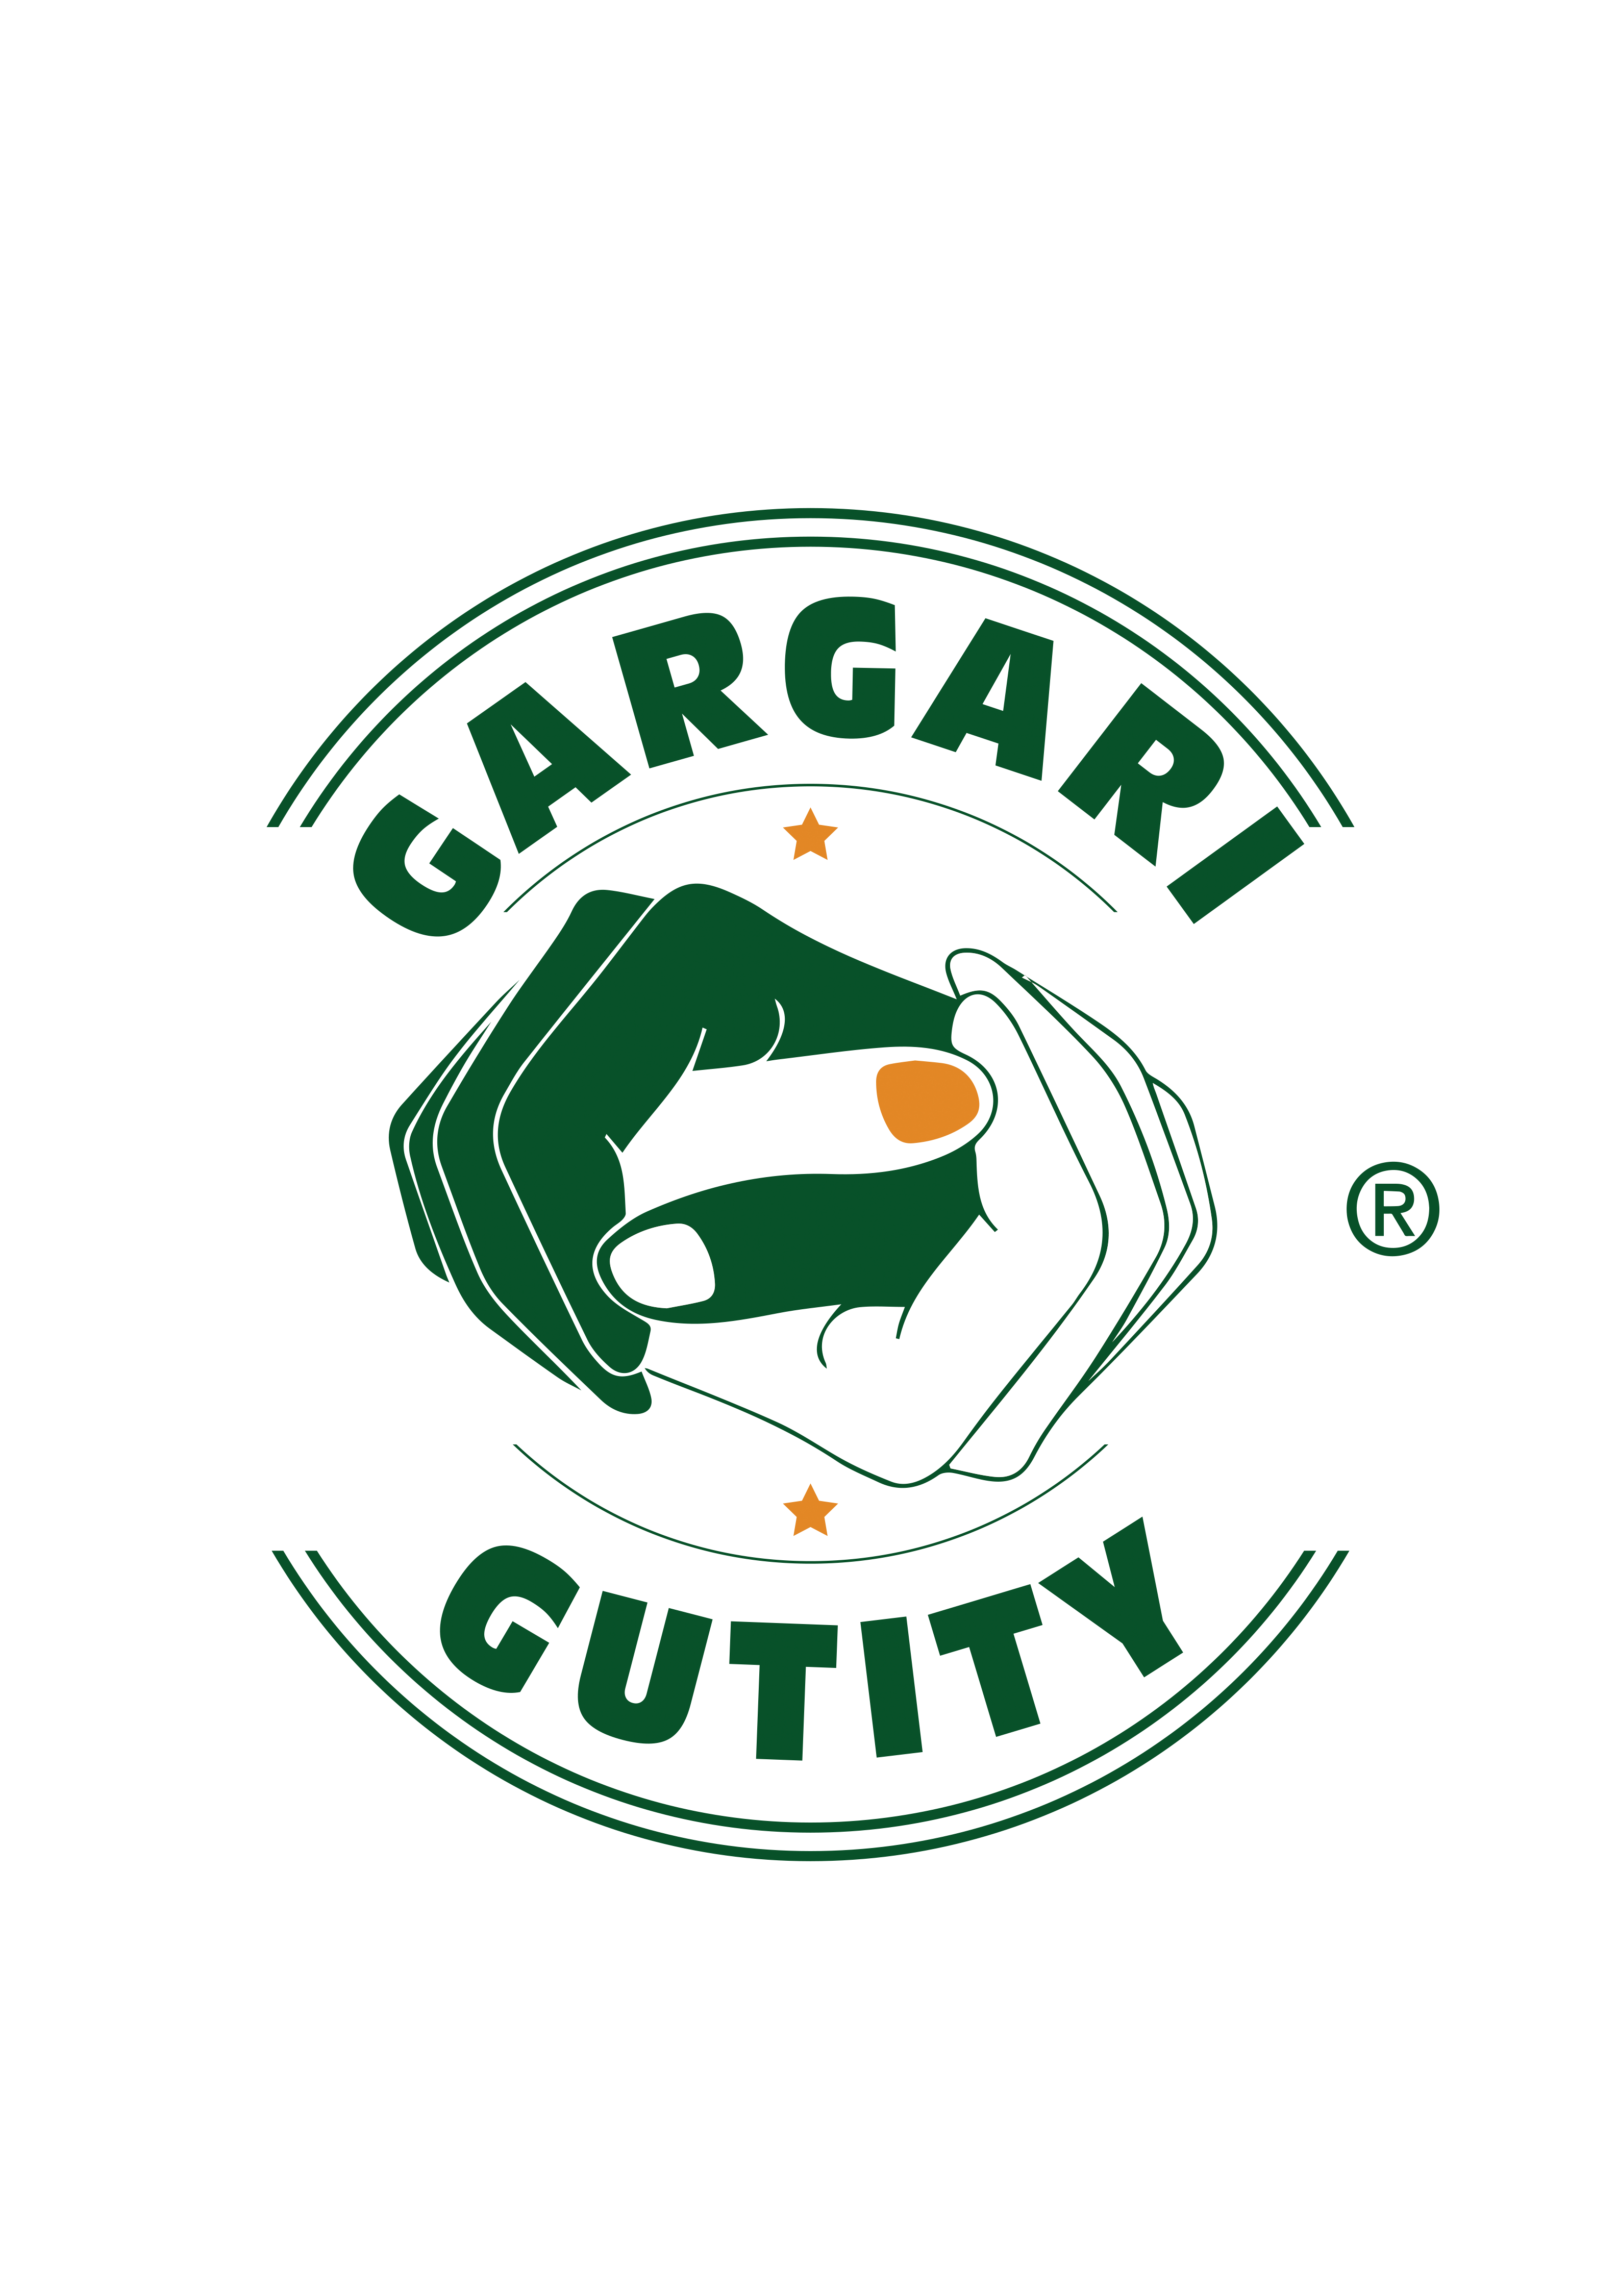 Anaerobic Gargari Gutity 211CO